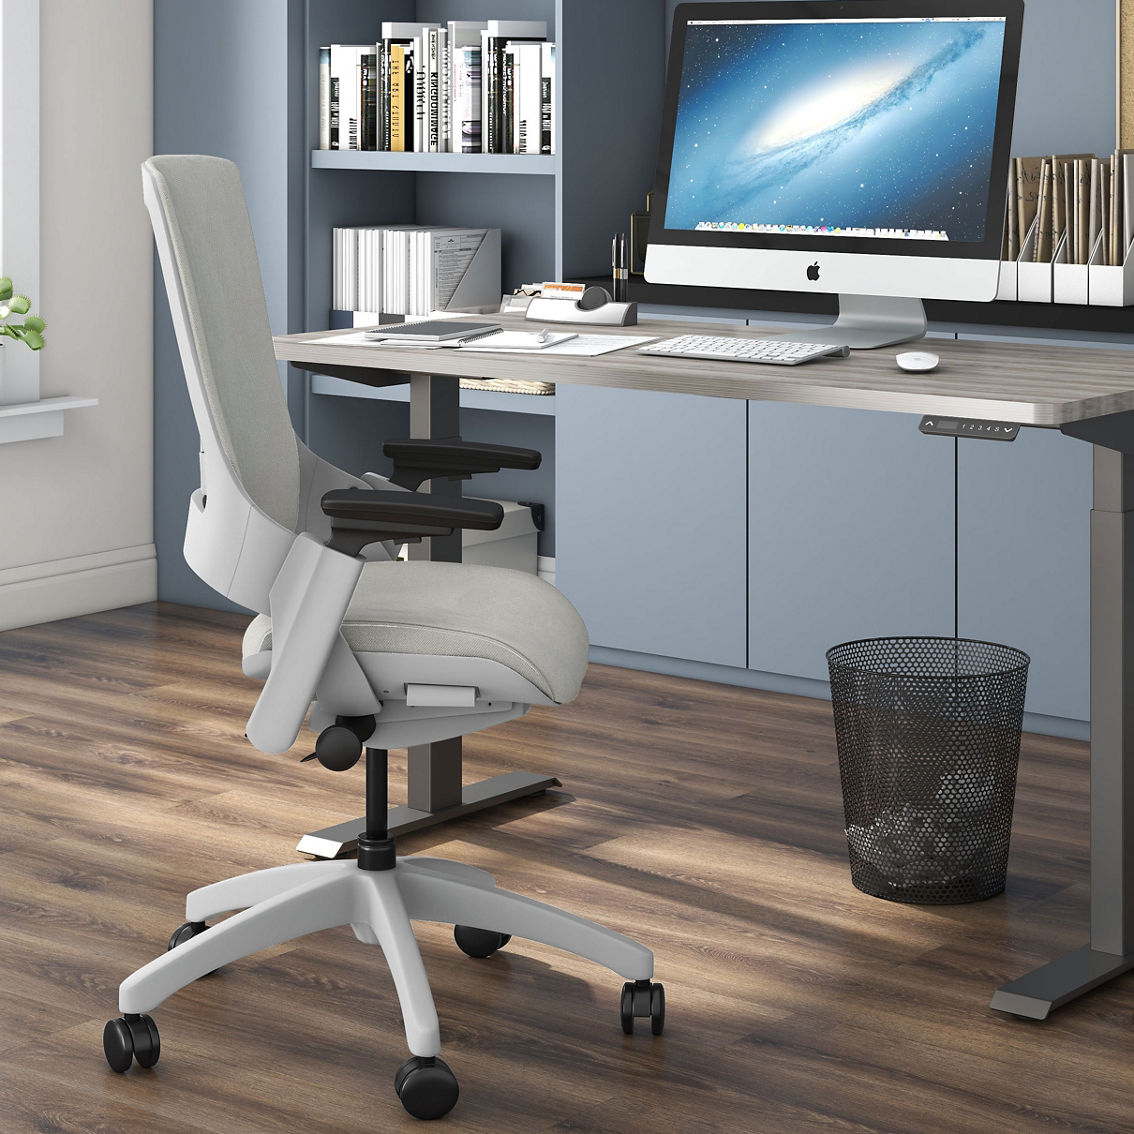 Furniture of America Nauta Gray Metal Mesh Office Chair - Image 2 of 5